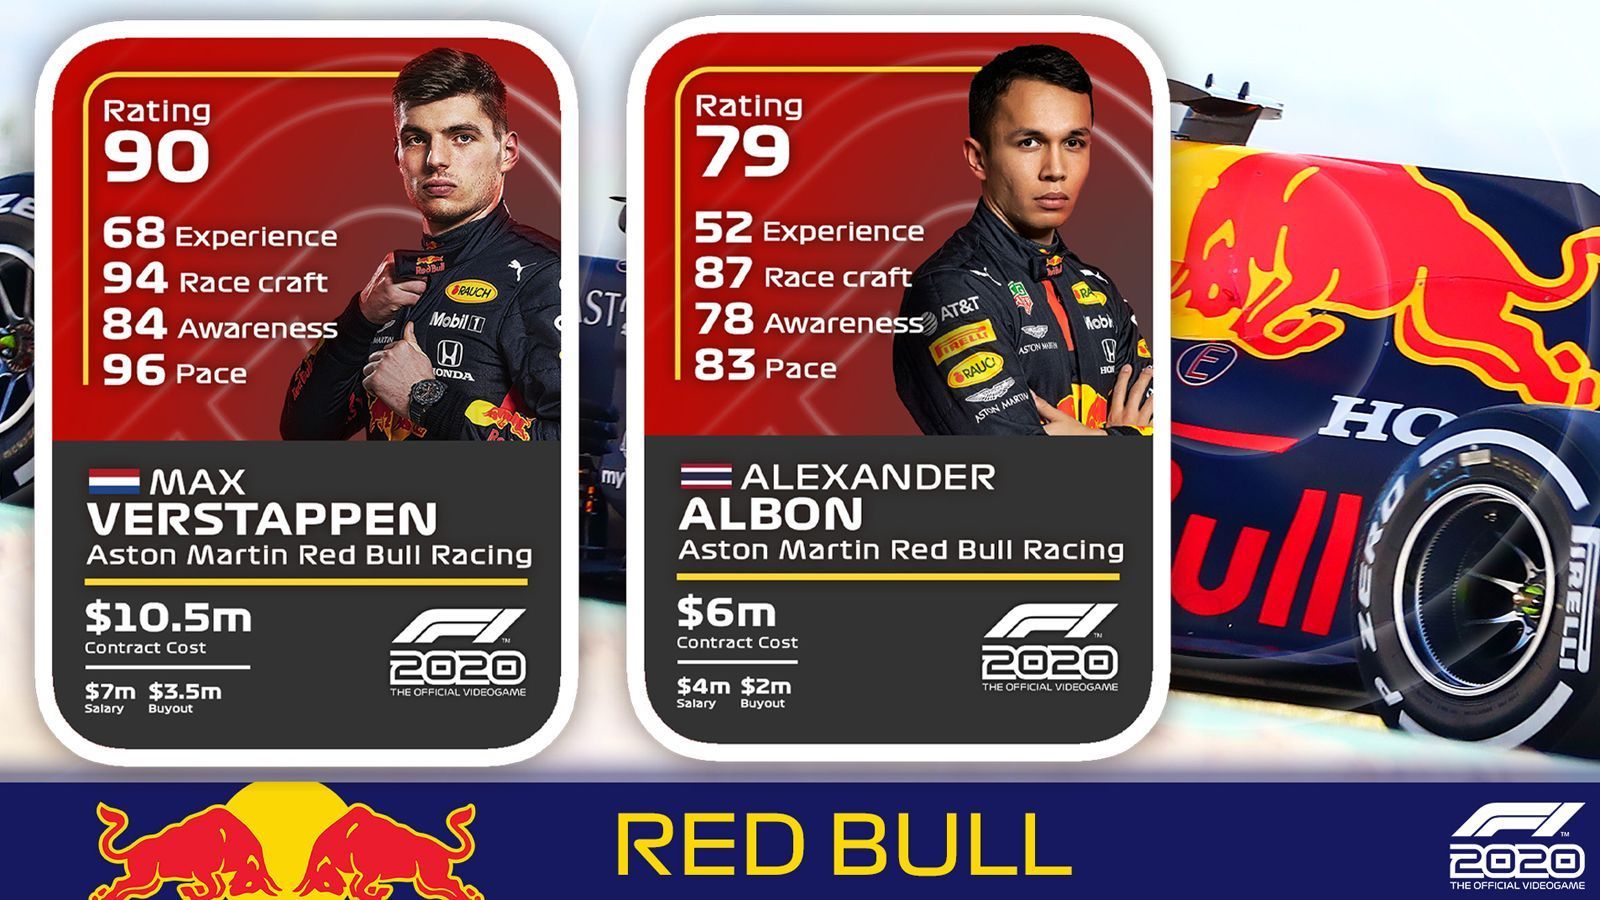 
                <strong>Red Bull Racing</strong><br>
                Max Verstappen: Erfahrung 68, Fahrkunst 94, Bewusstsein 84, Pace 96, Overall Rating 90Alex Albon: Erfahrung 52, Fahrkunst 87, Bewusstsein 78, Pace 83, Overall Rating 79
              